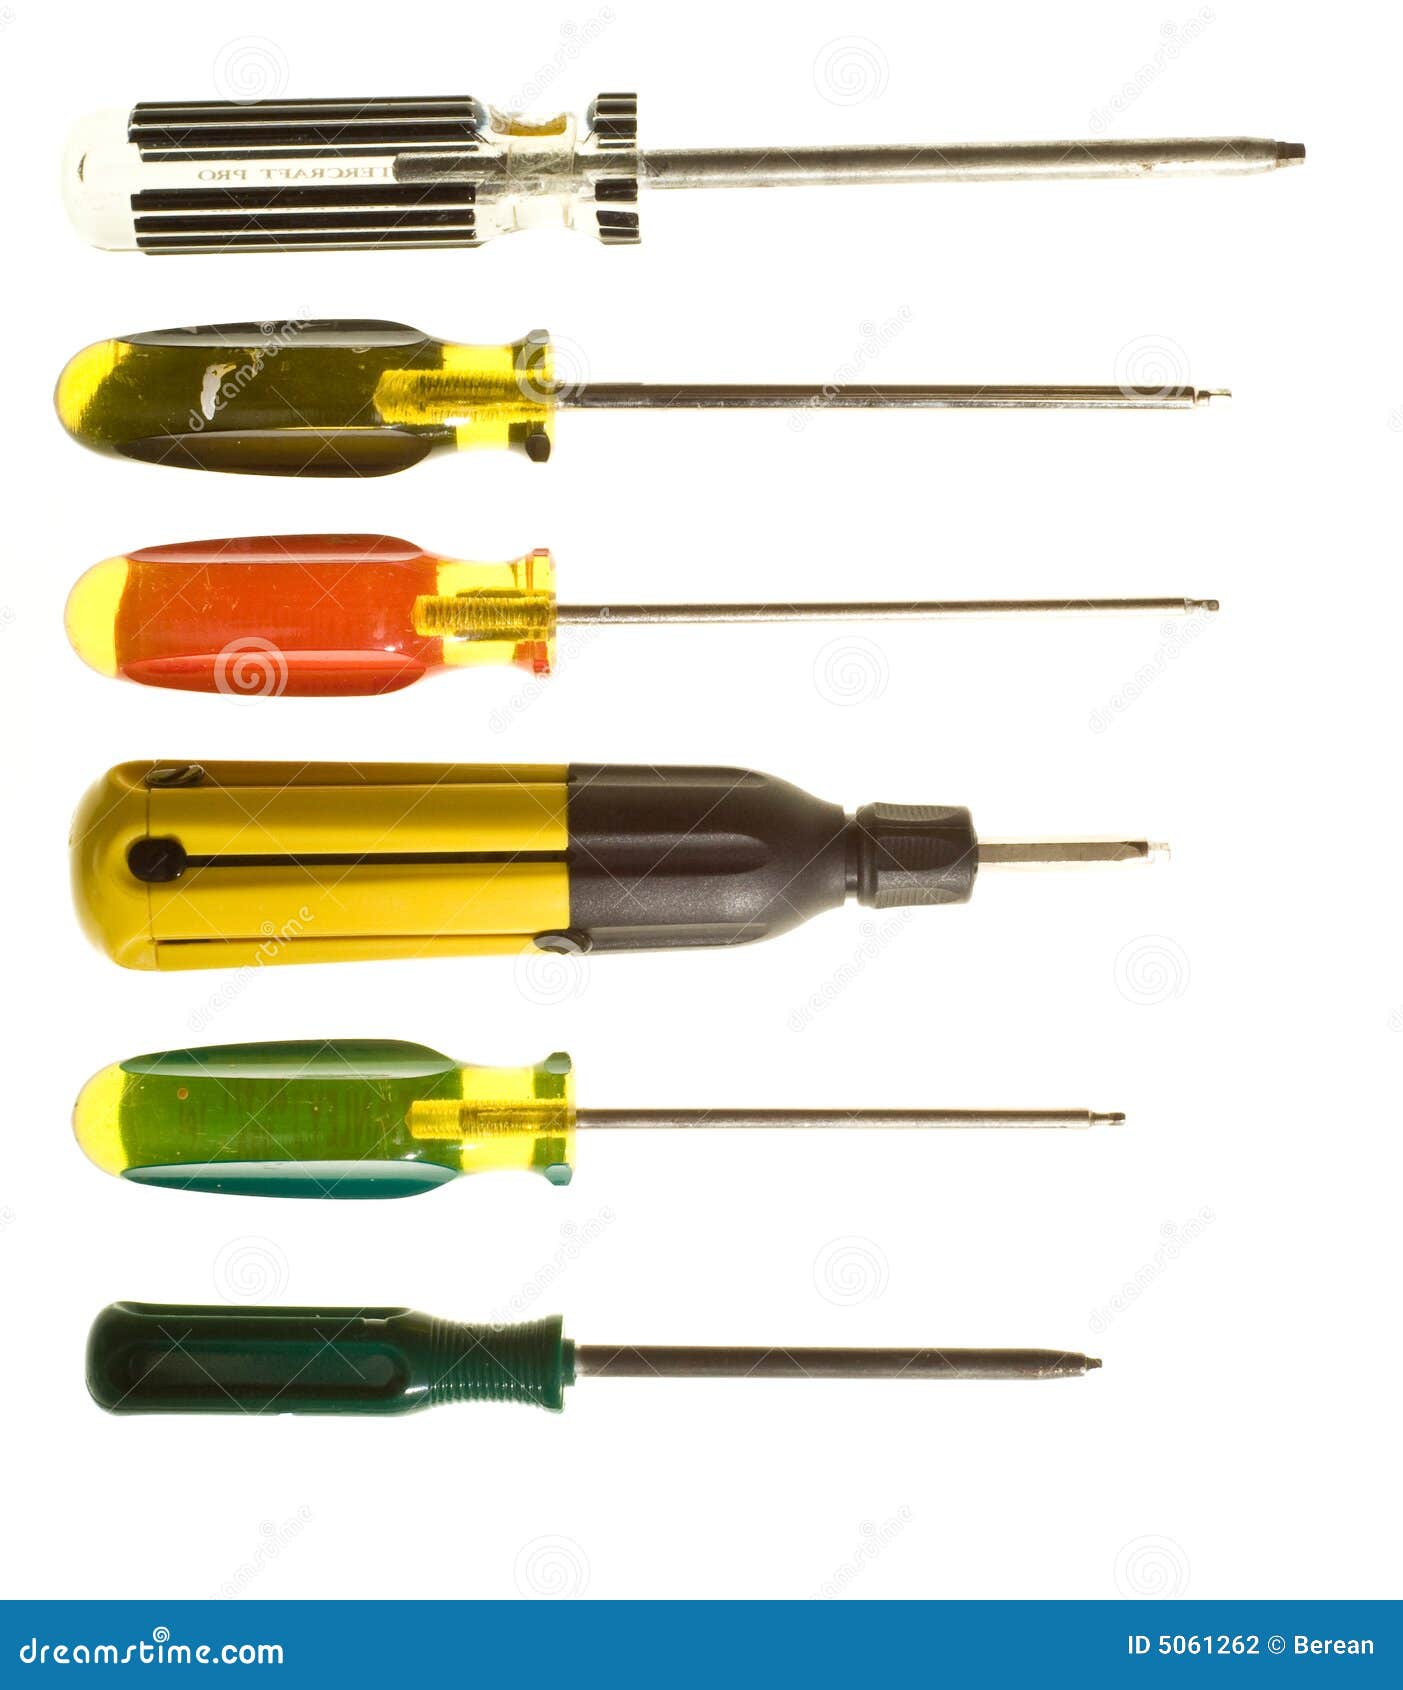 robertson screwdrivers